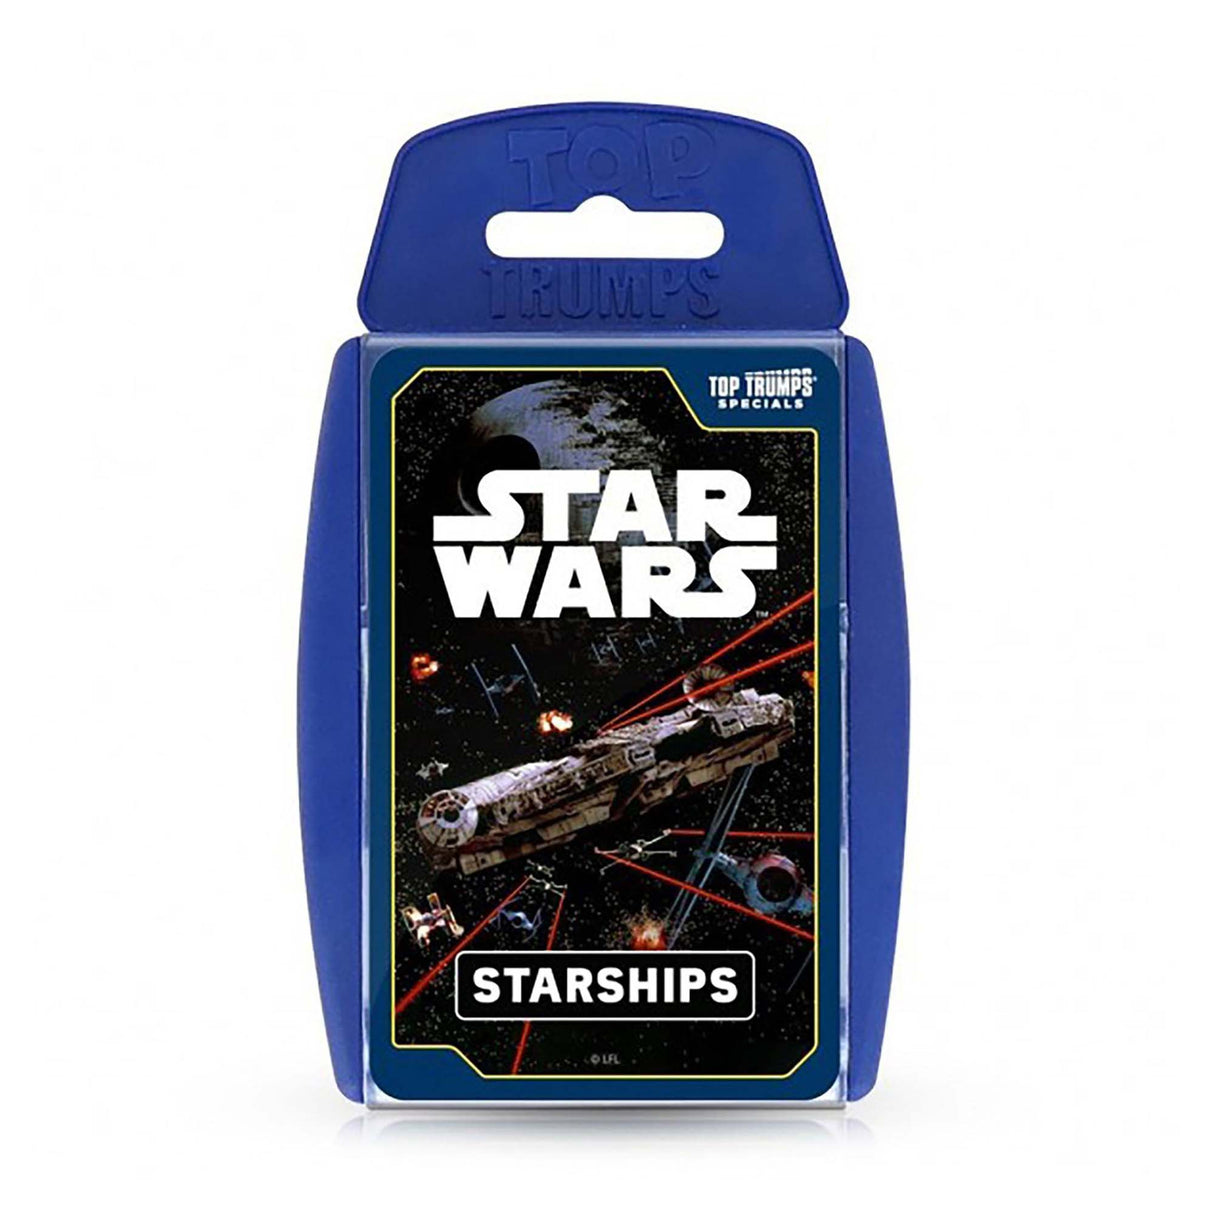 Top Trumps Star Wars Starships Card Game